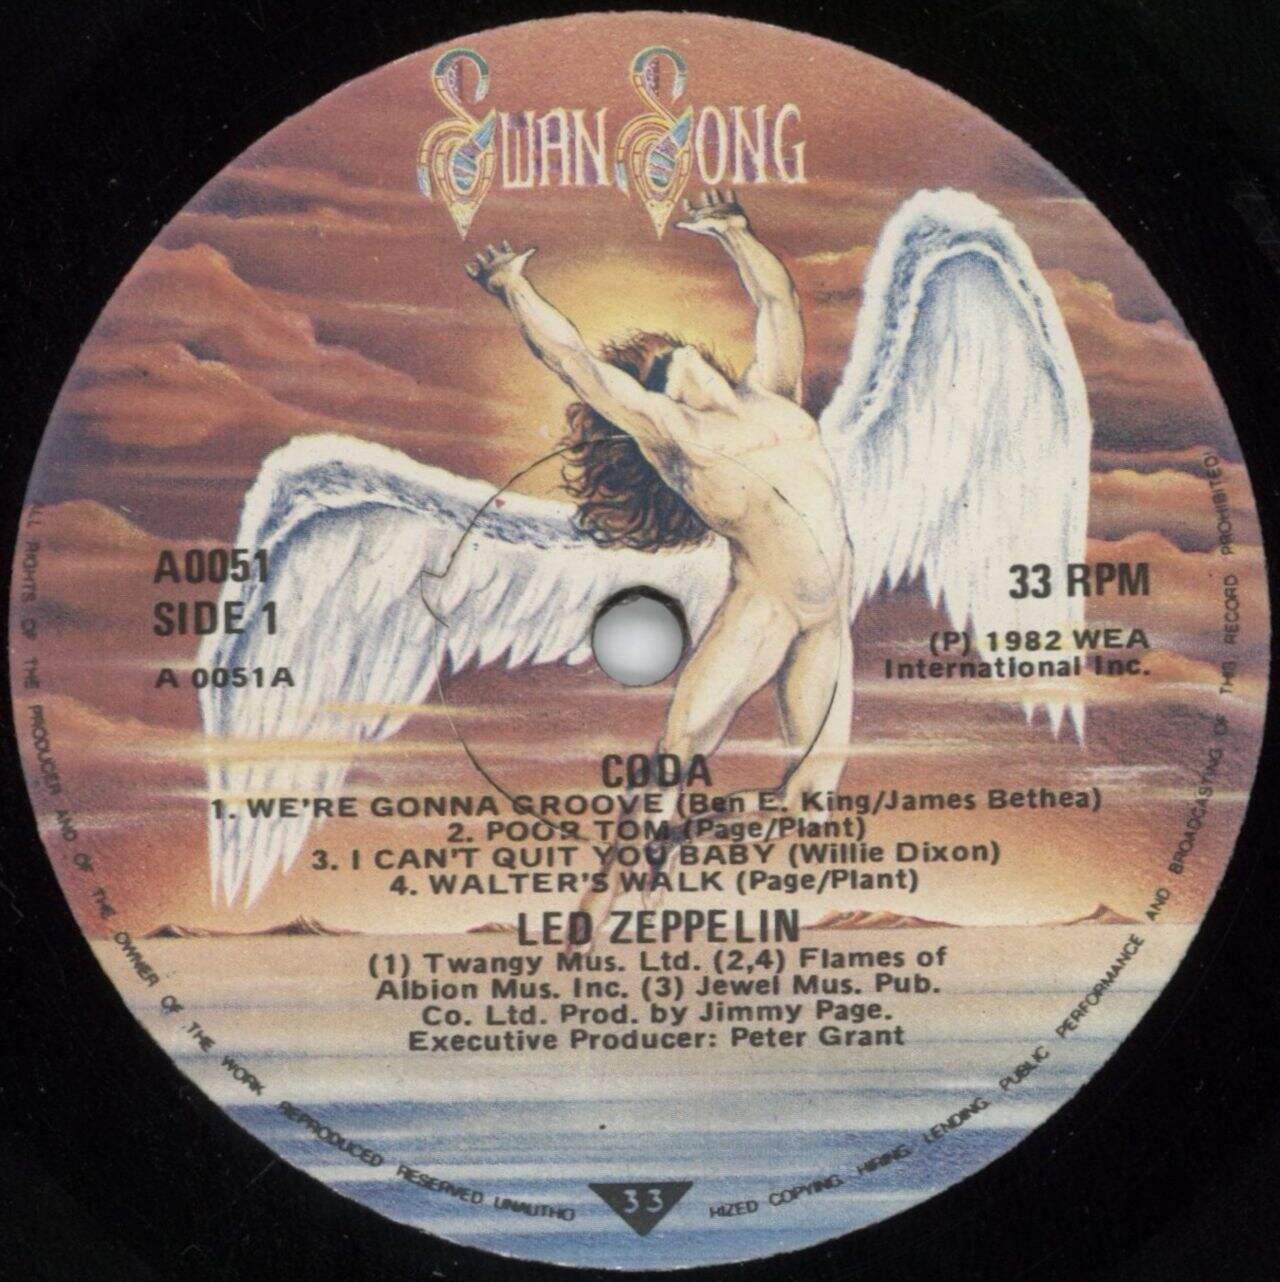 Led Zeppelin Coda - 1st Irish Vinyl LP